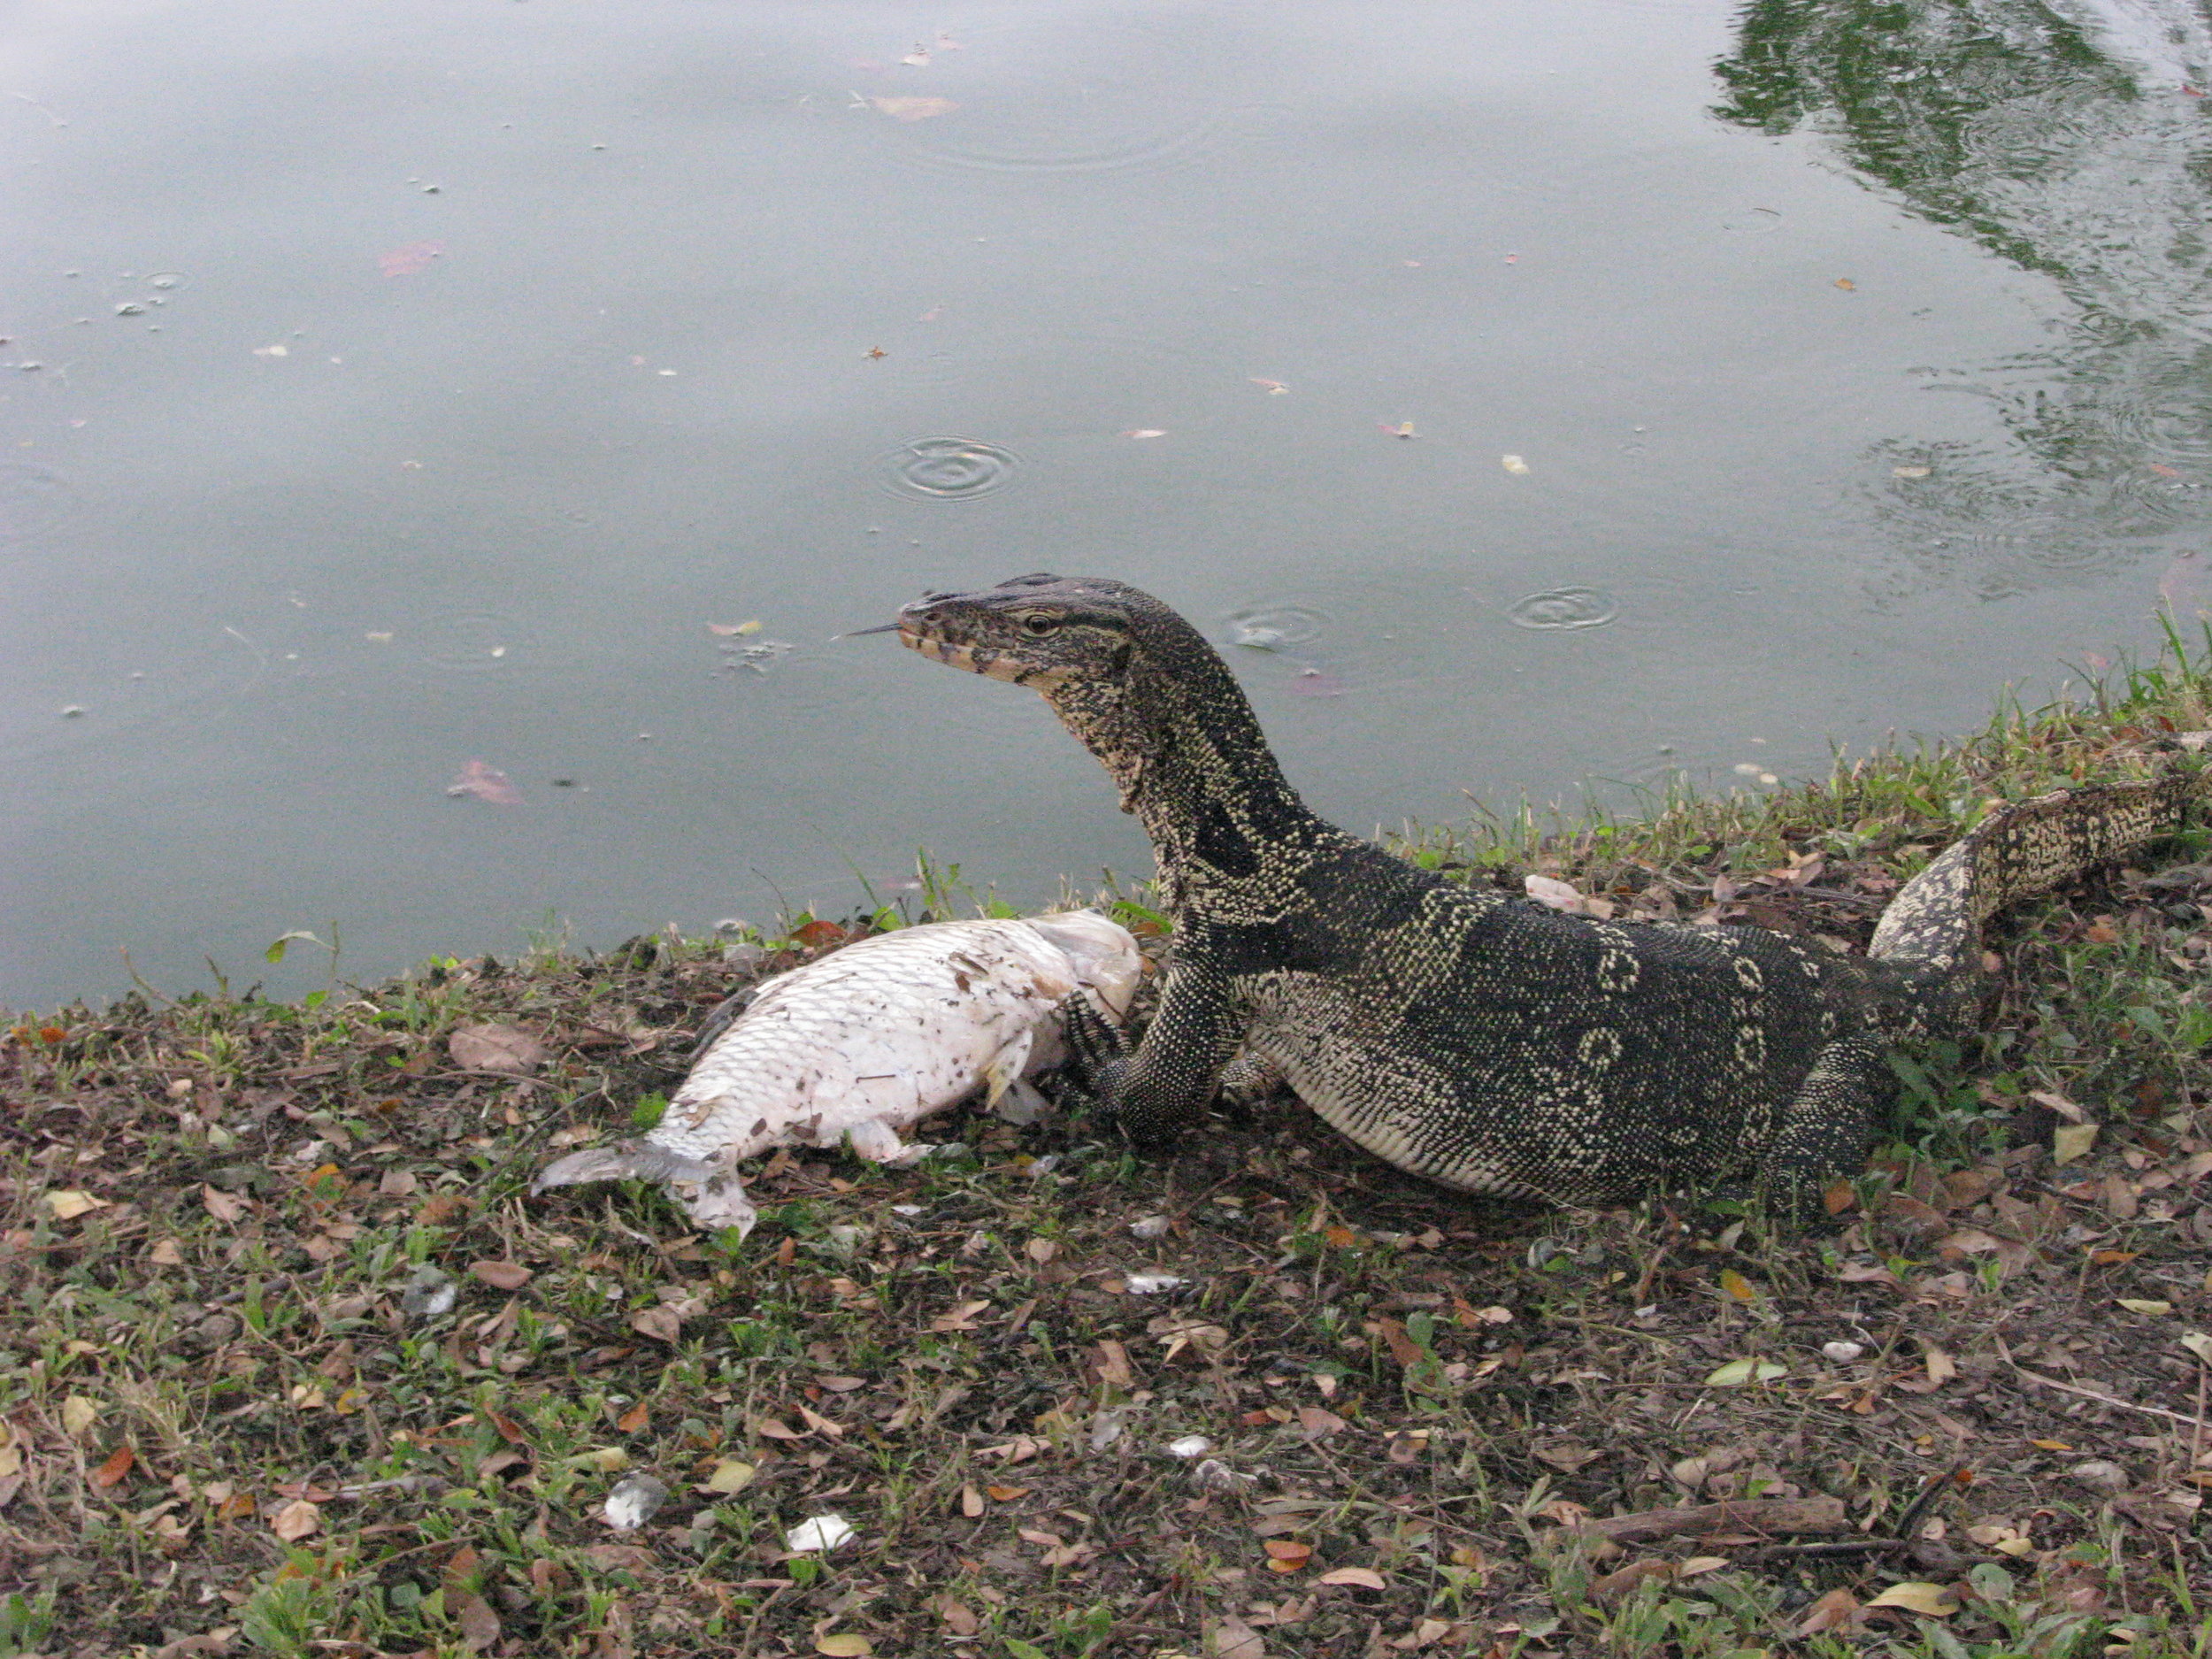 Bangkok - Lizard